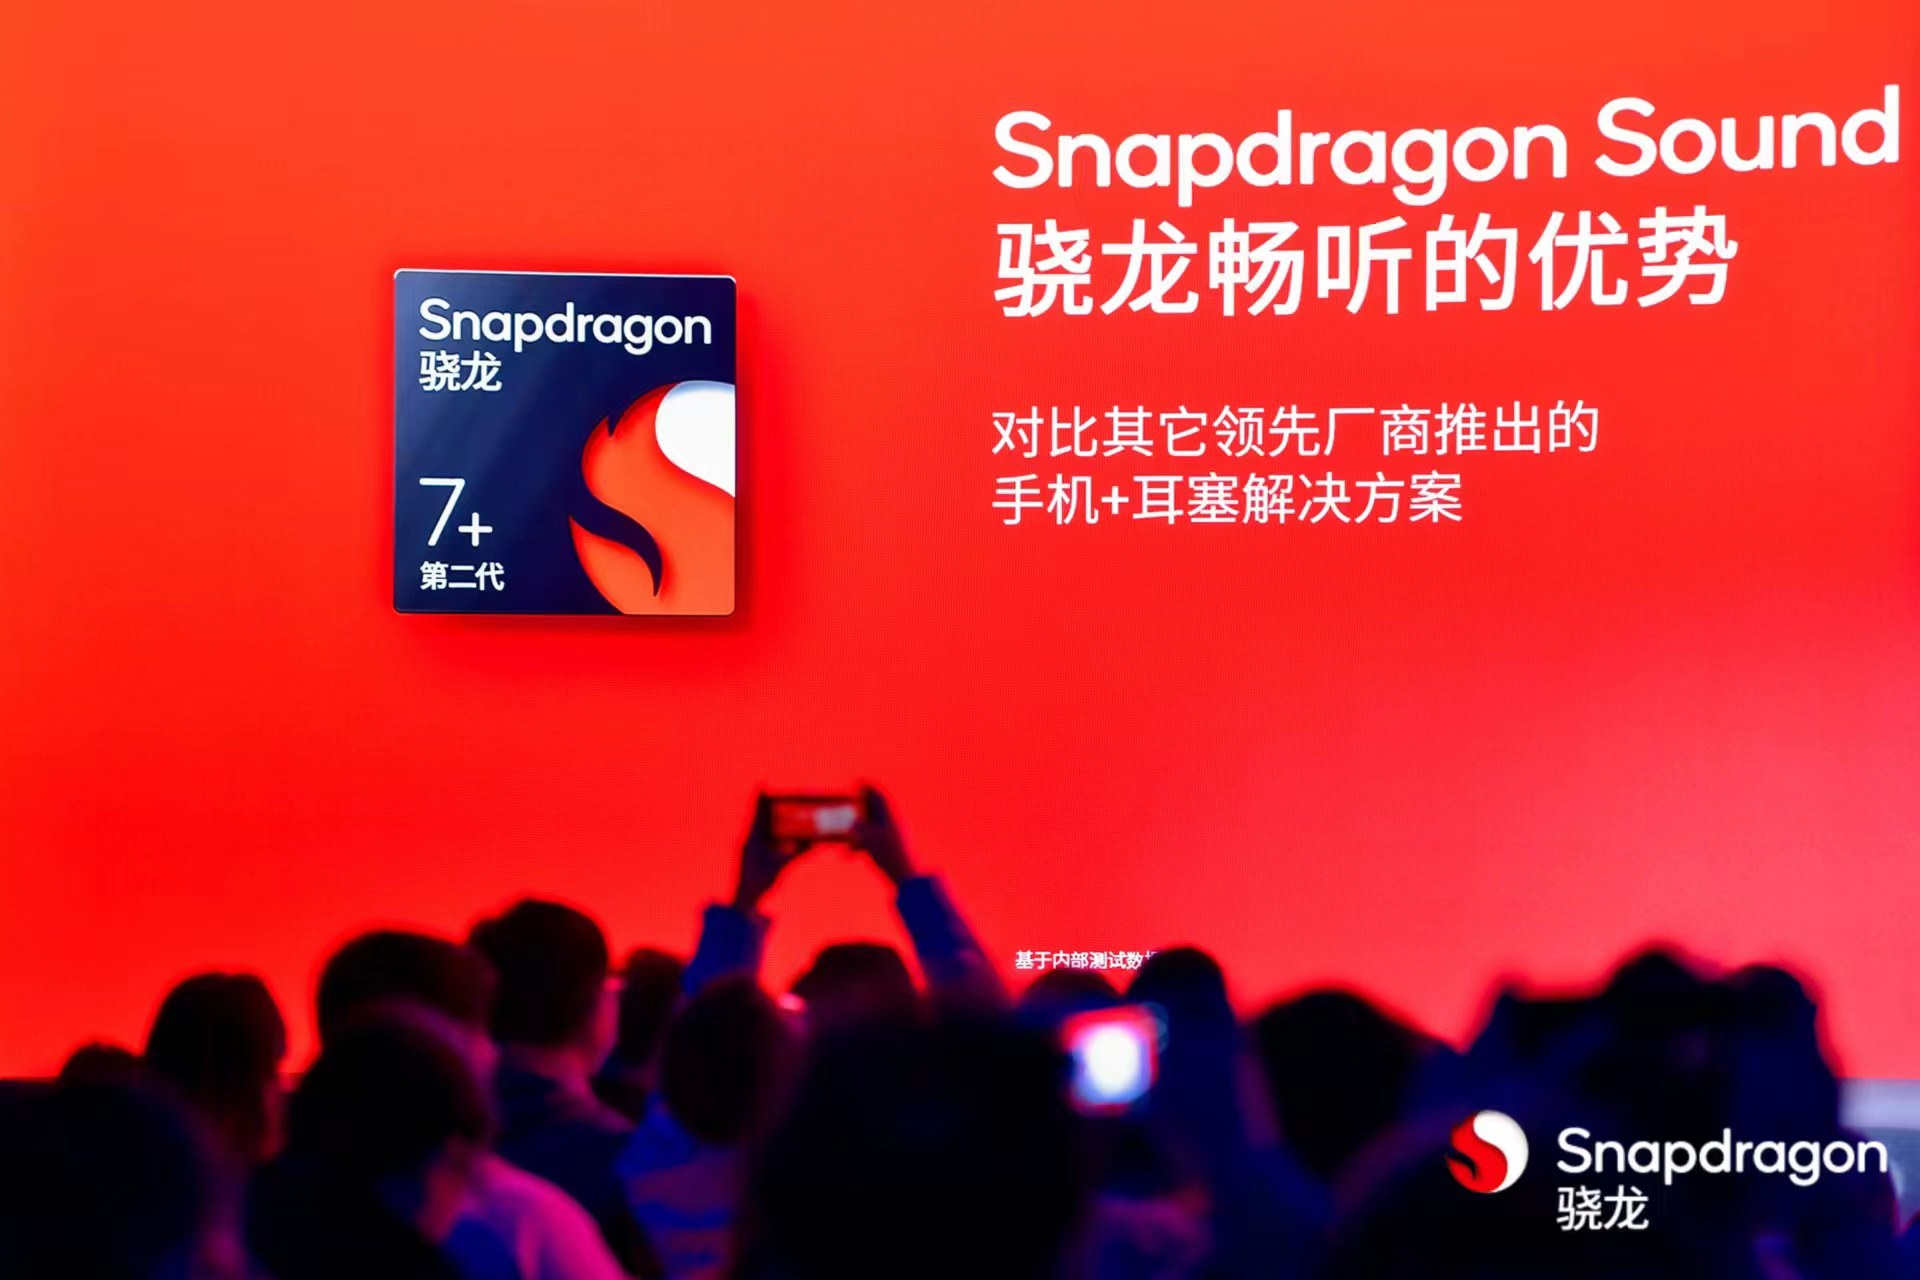 Snapdragon 7+ Gen 2 with Snapdragon Sound